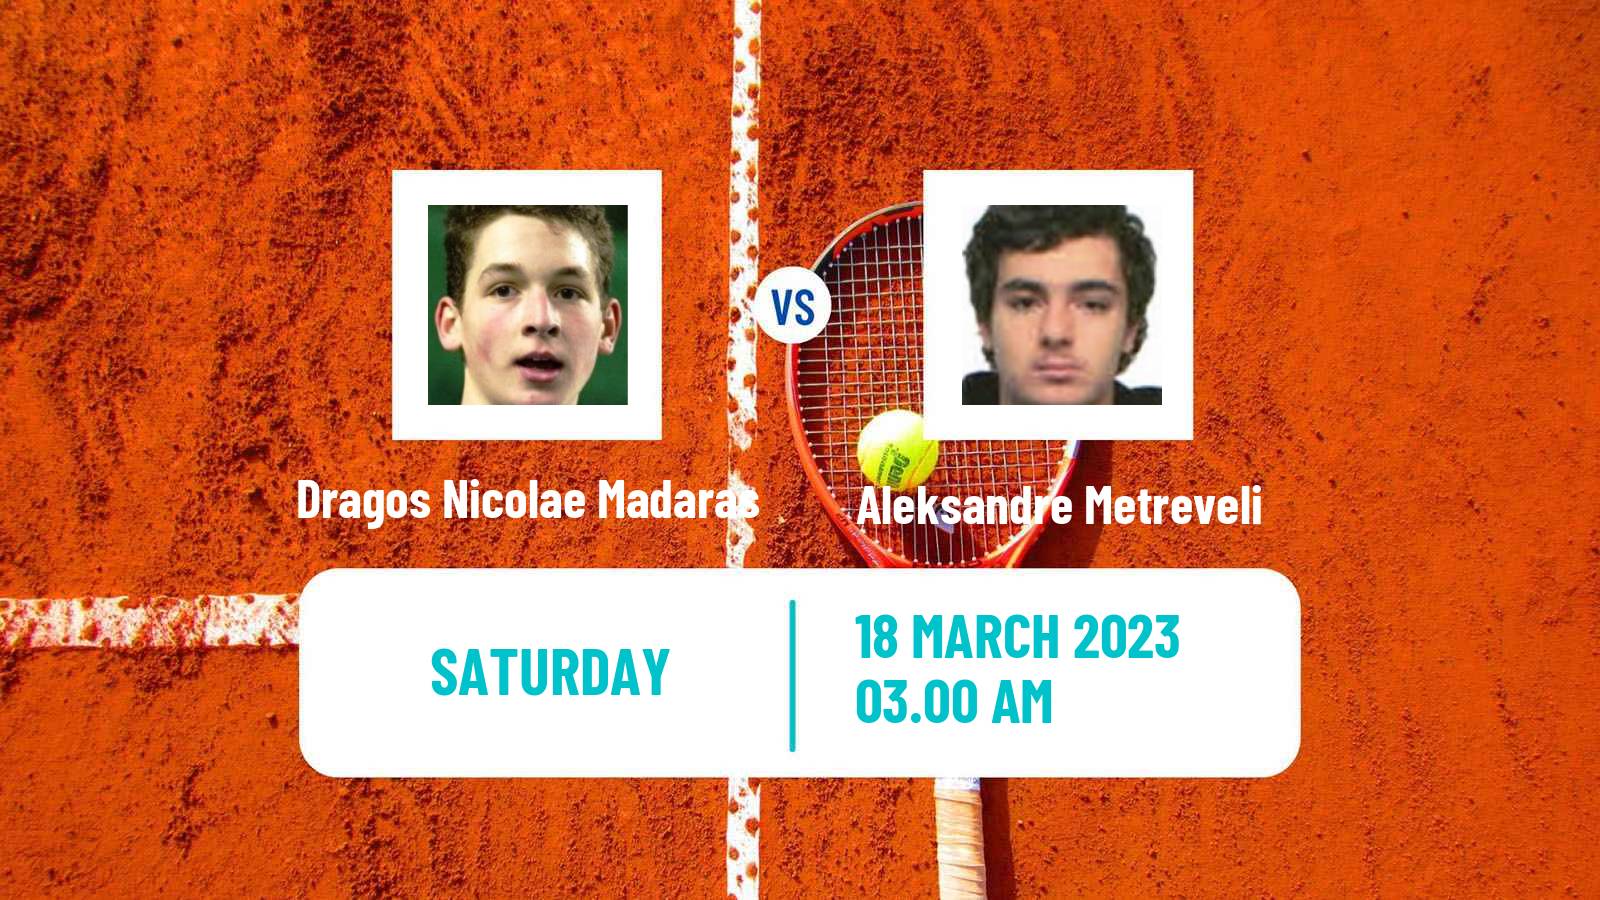 Tennis ITF Tournaments Dragos Nicolae Madaras - Aleksandre Metreveli